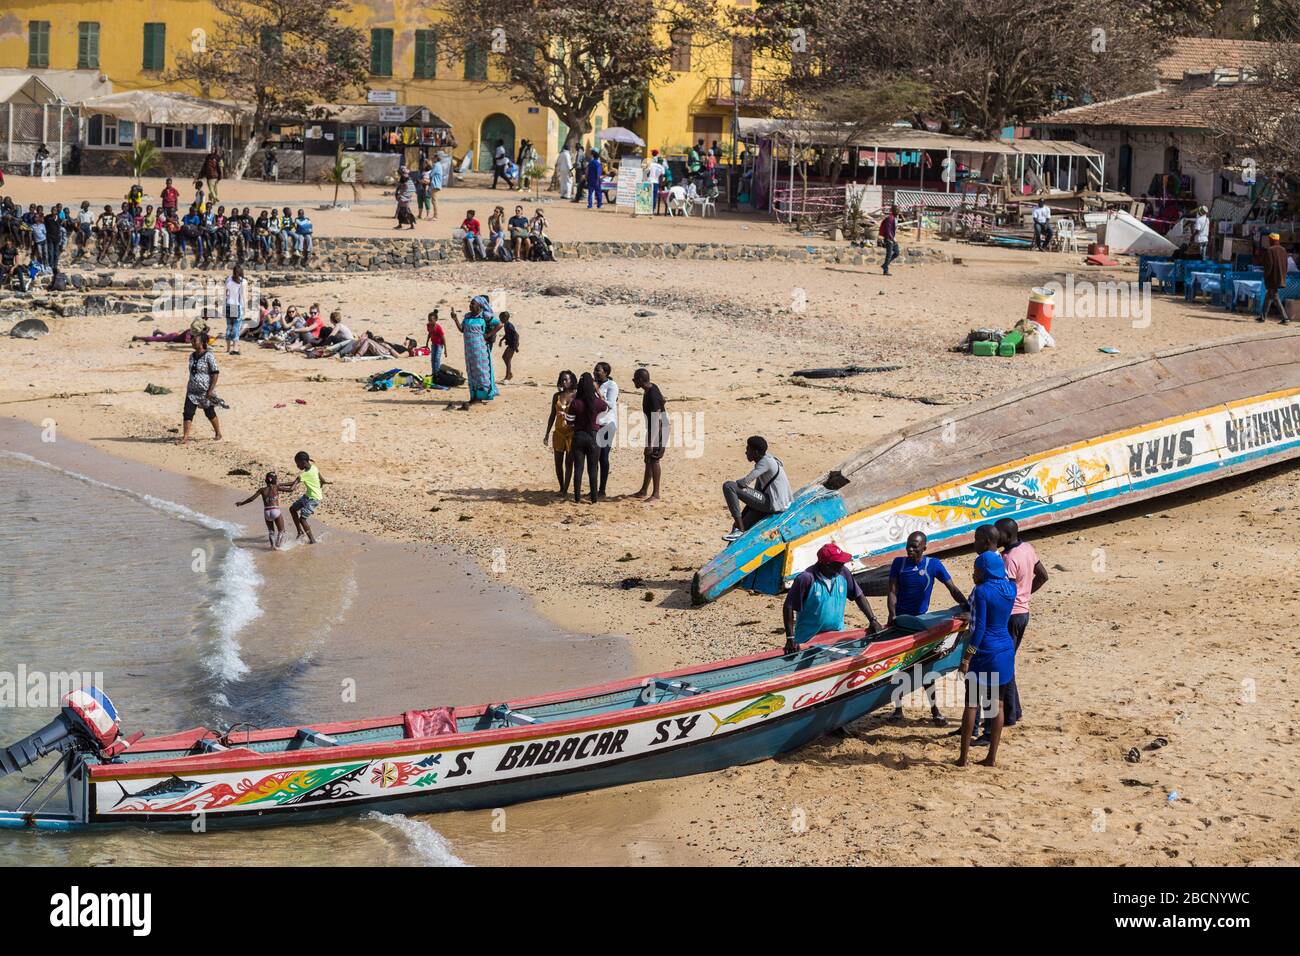 People on the beach in Gorée, Senegal Stock Photo